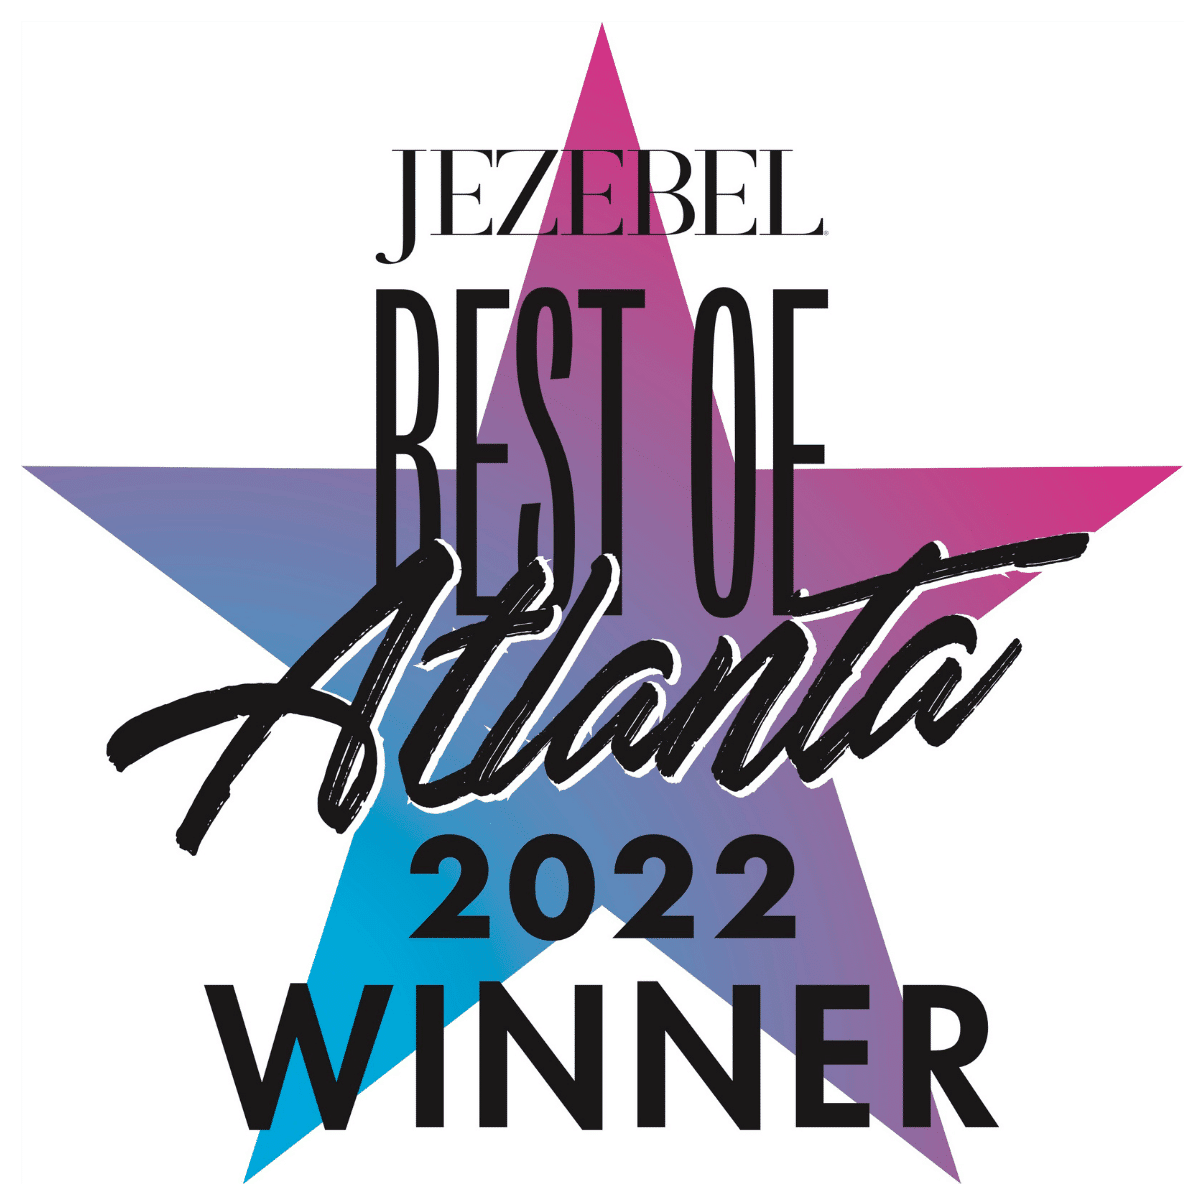 Jezebel Best of Atlanta 2022 Winner - Sculpted Contours in Atlanta GA